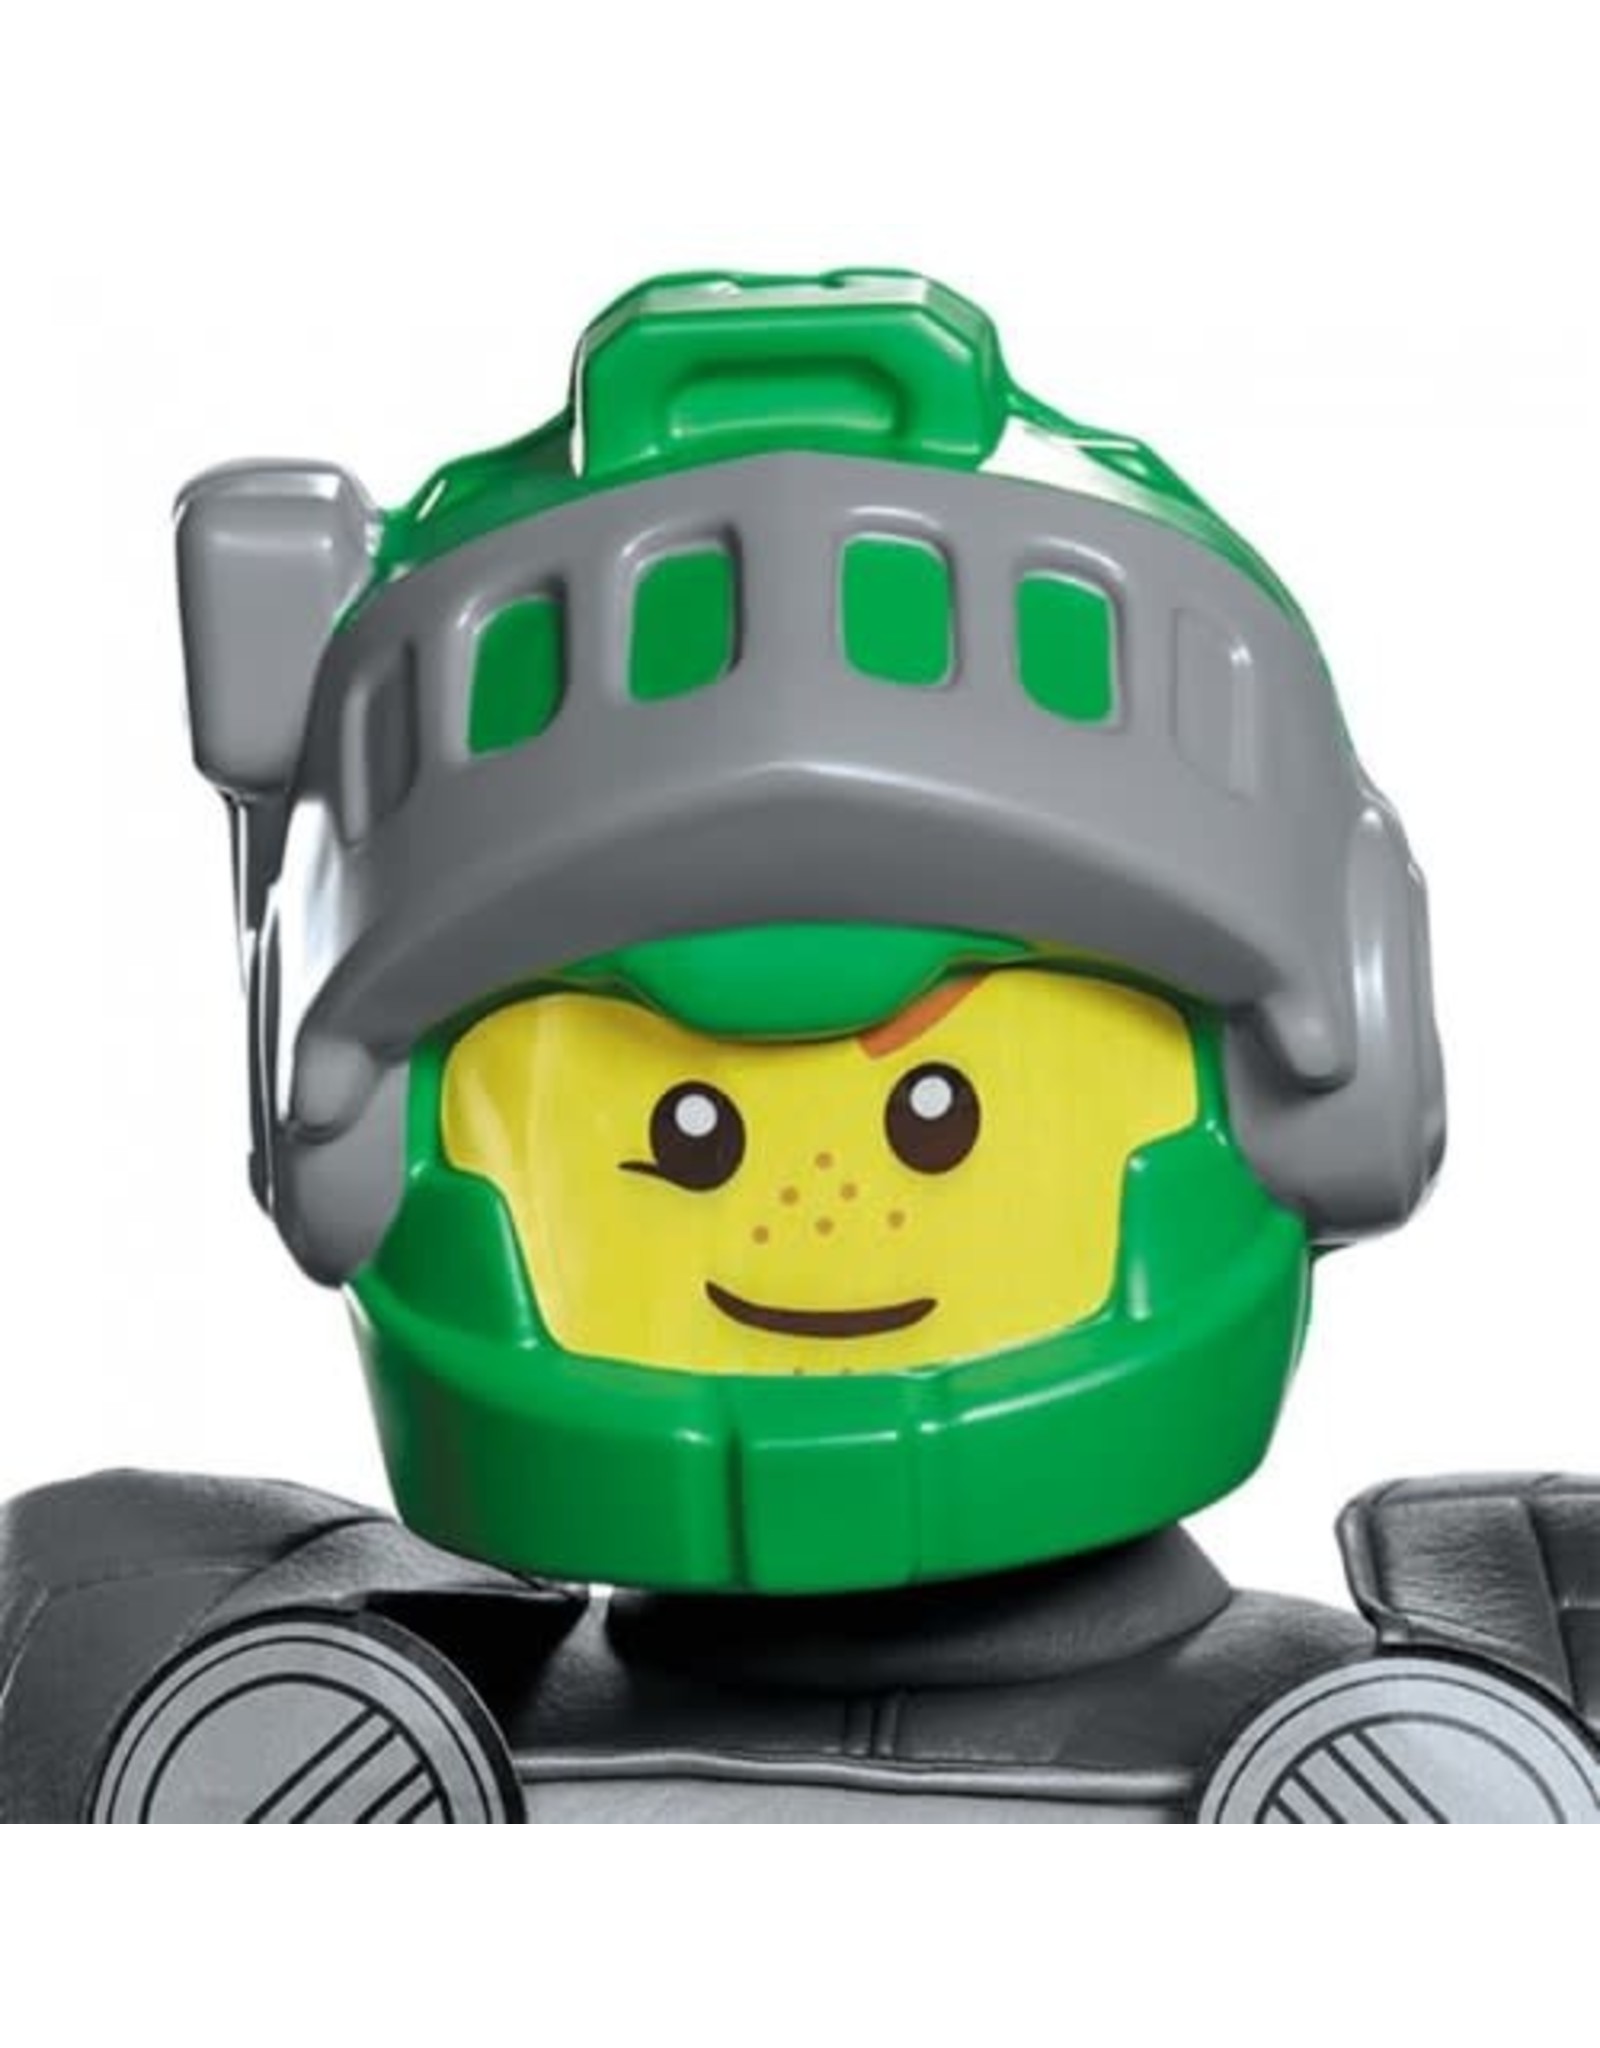 Disguise Inc Lego Nexo Knights Aaron, Green, Childrens